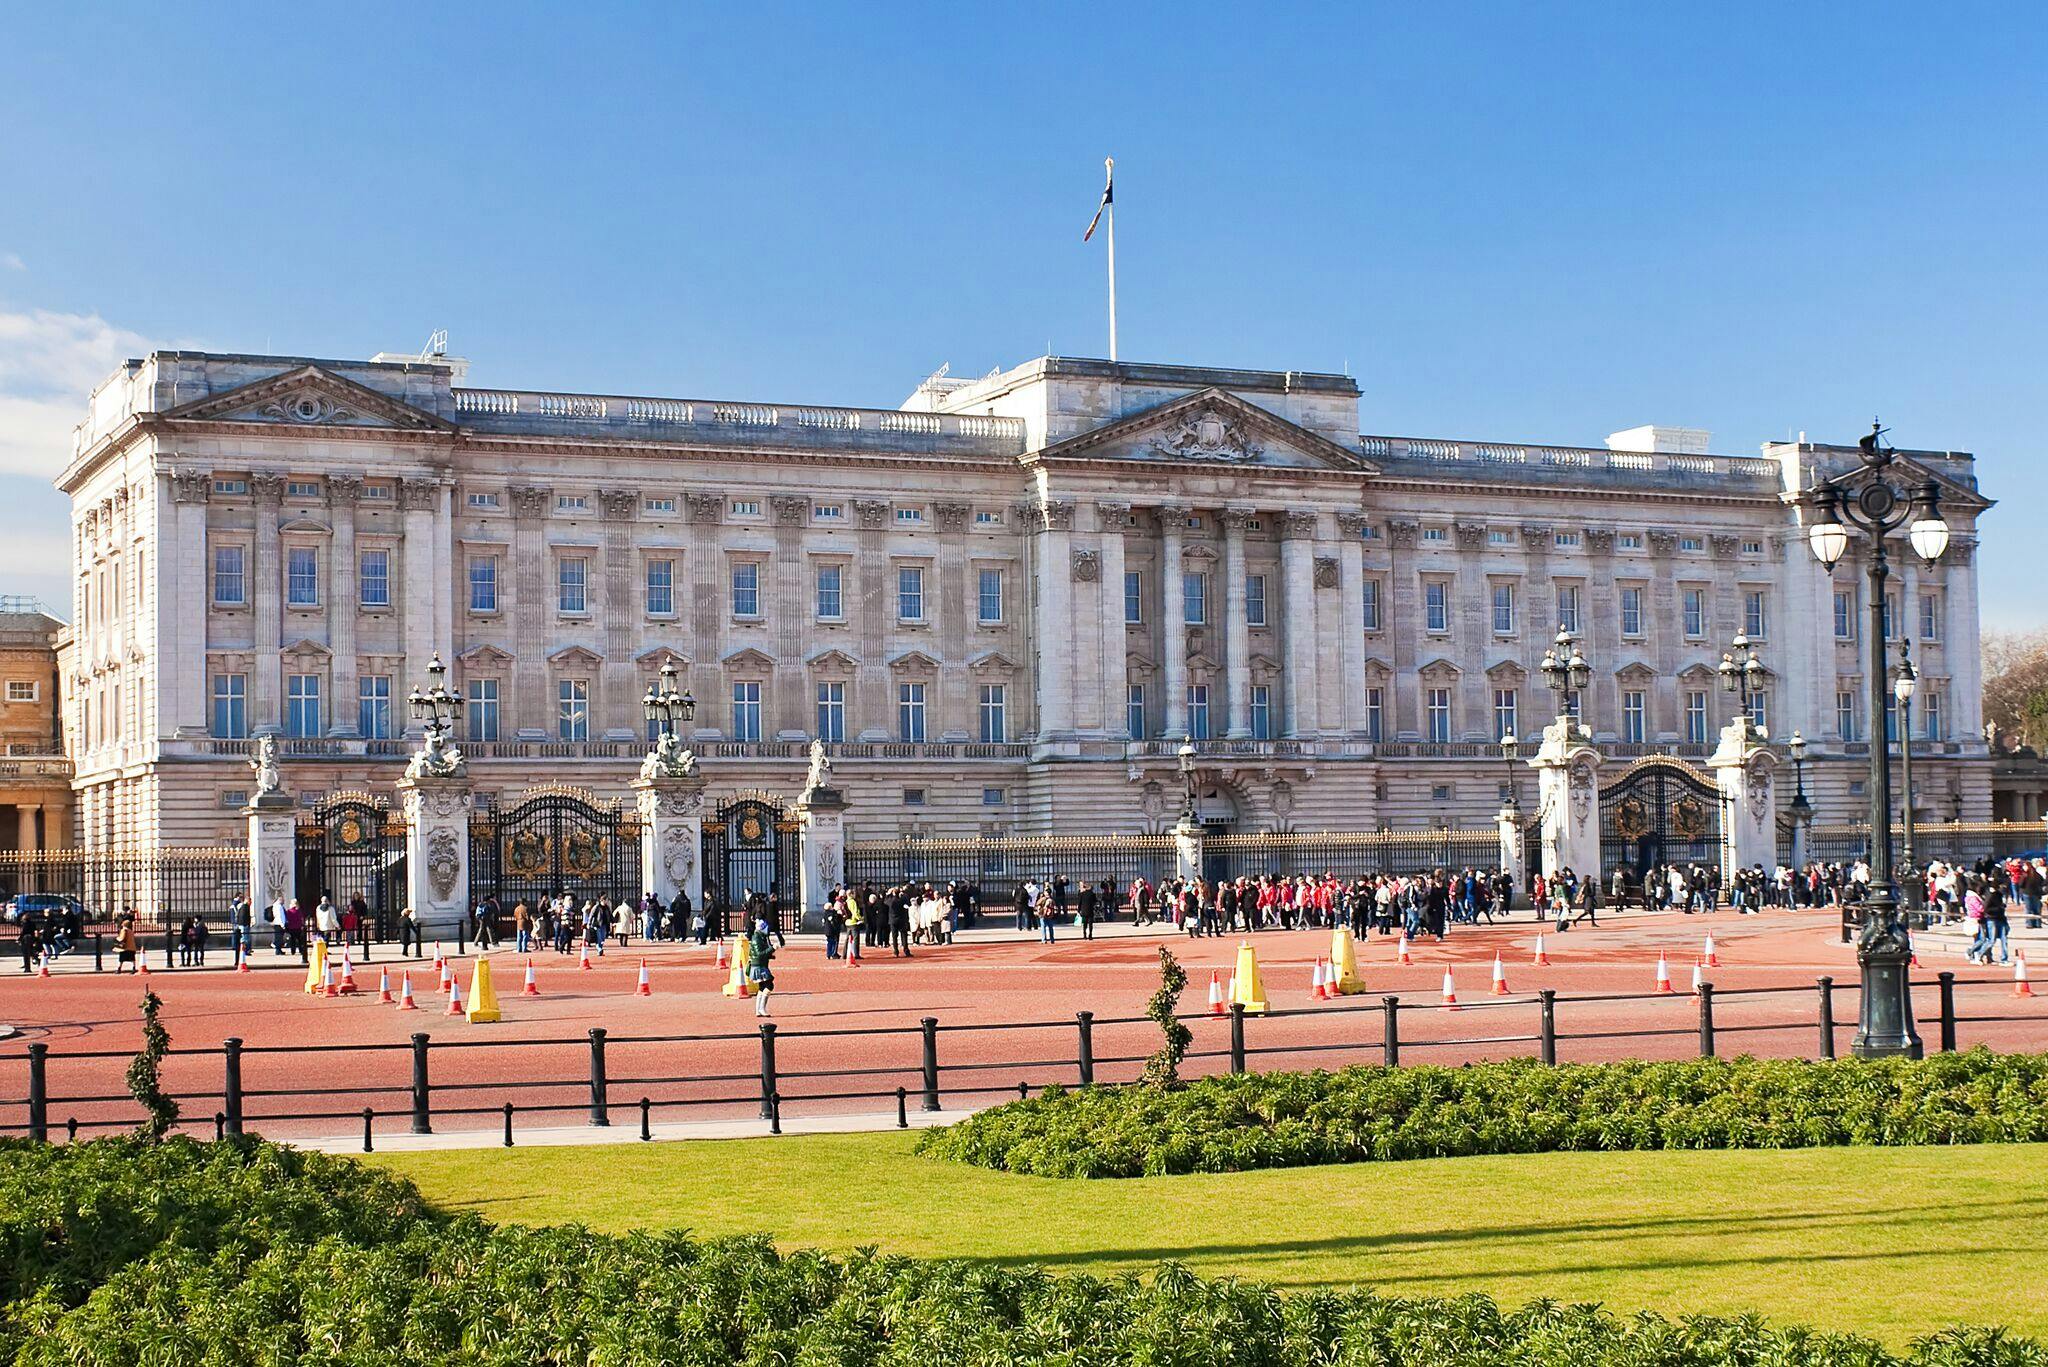 Buckingham Palace-kaartjes